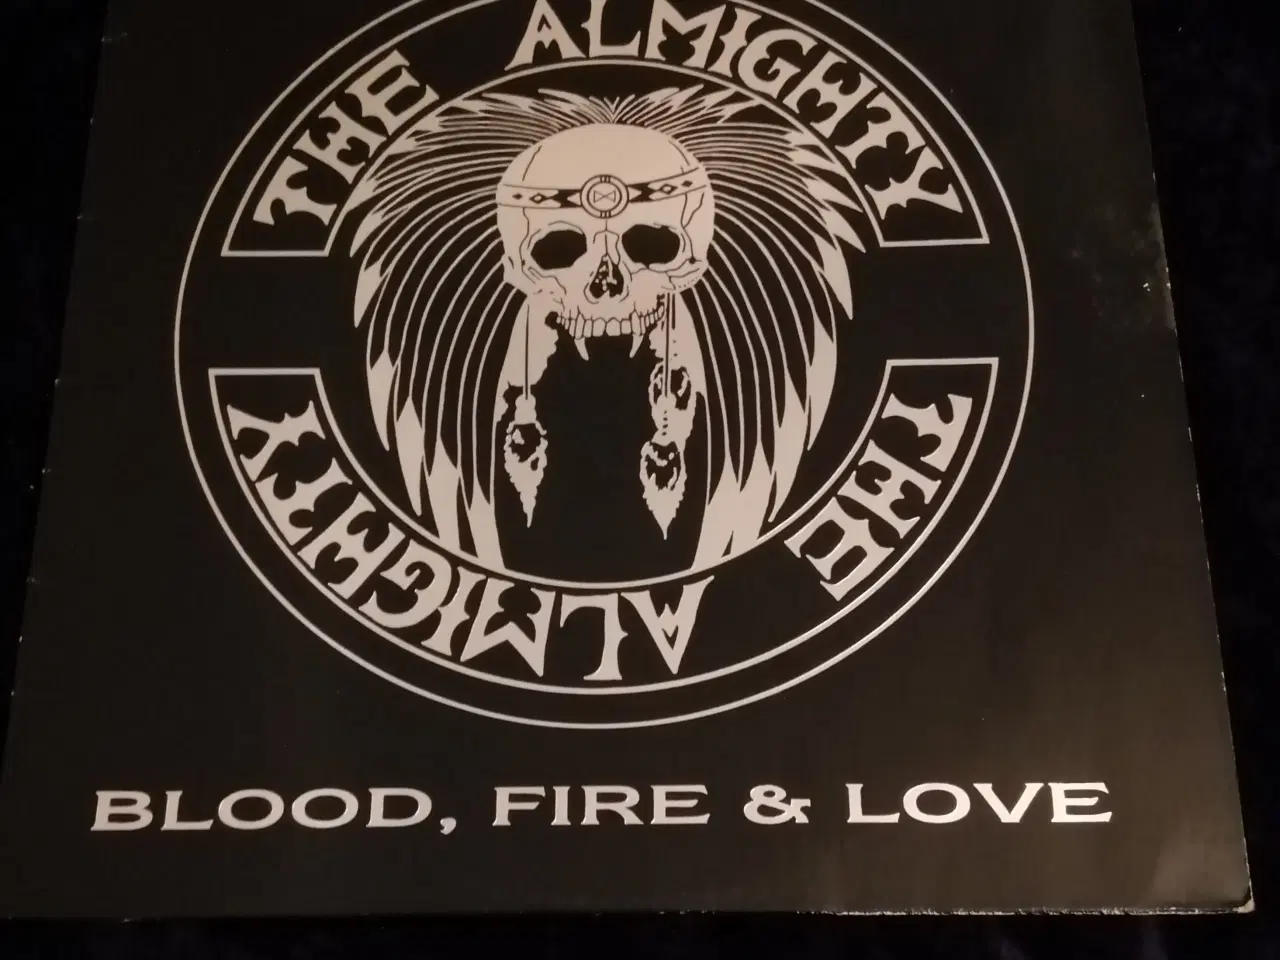 Billede 1 - The Almighty: Blood, fire & love